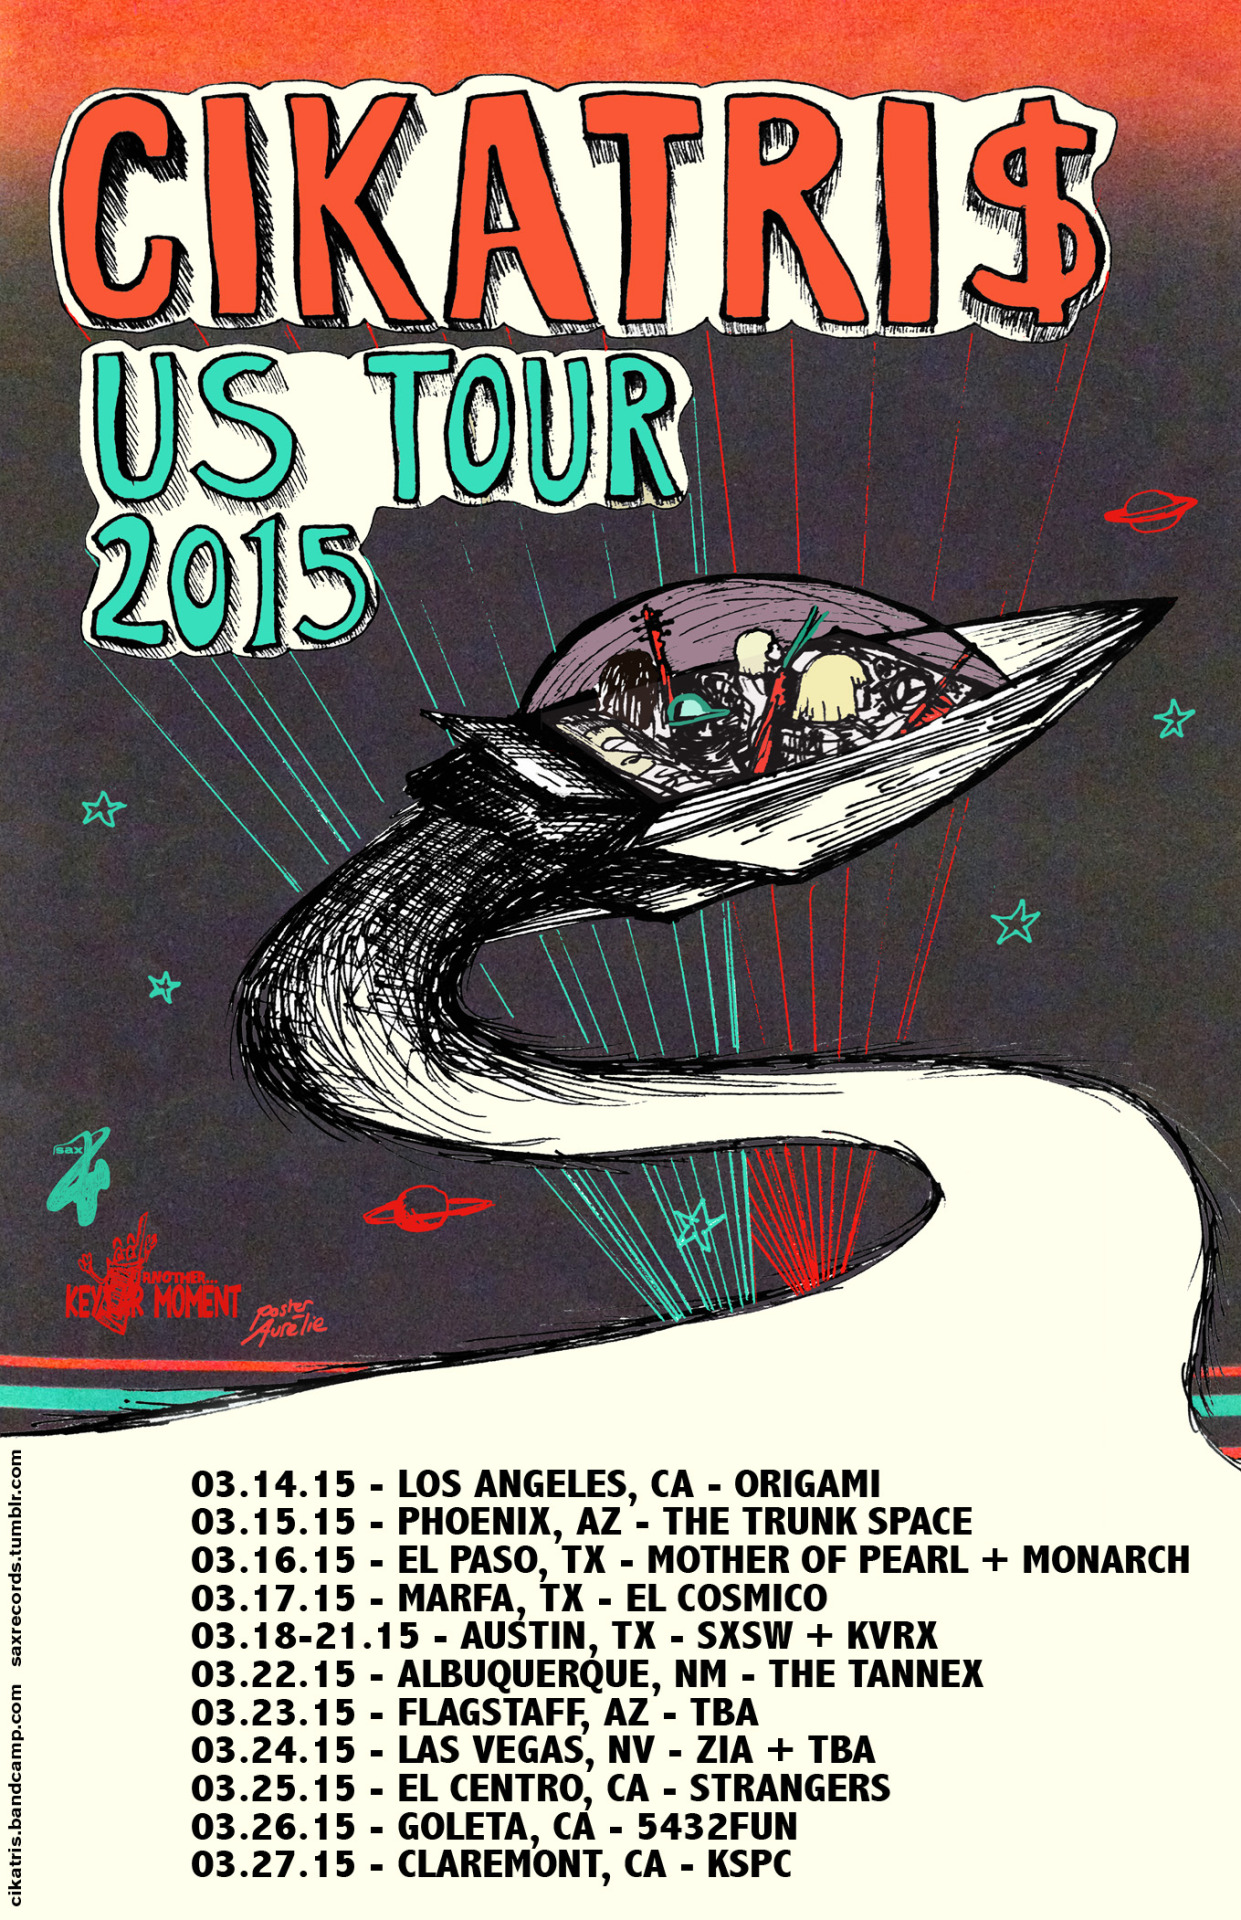 CIKATRI$ USA tour 2015 poster